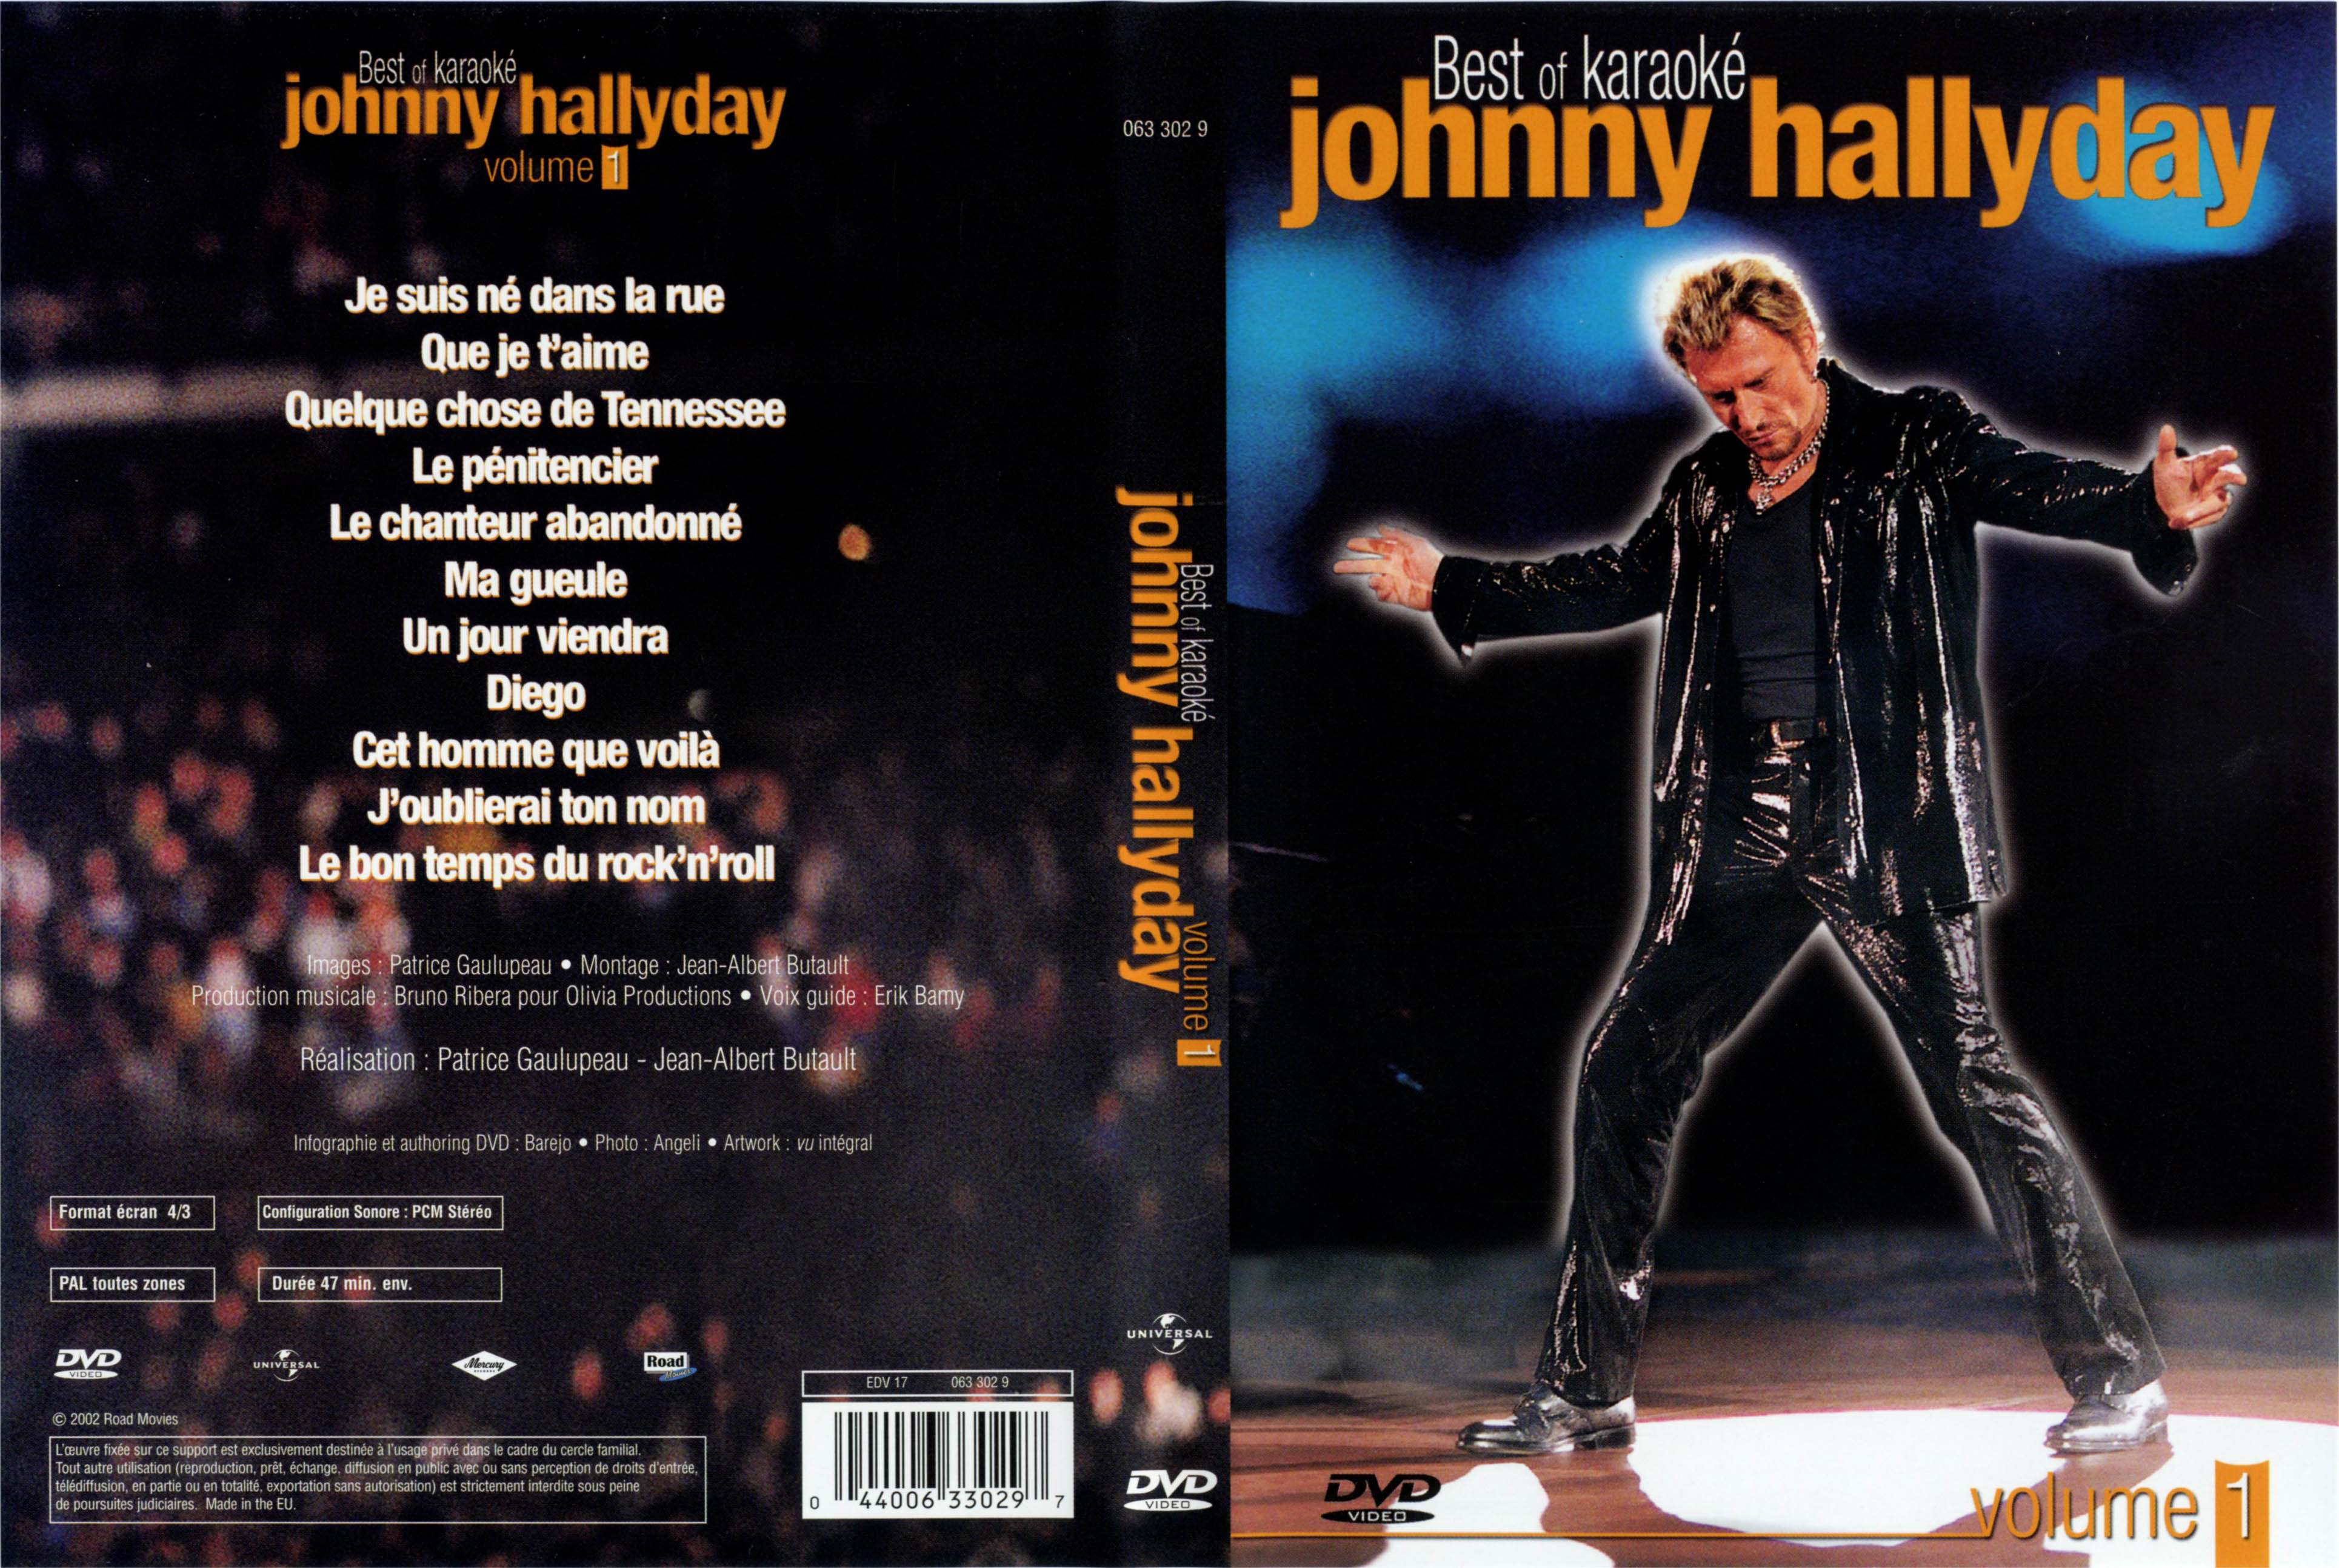 Jaquette DVD Johnny hallyday - best of karaoke vol 1